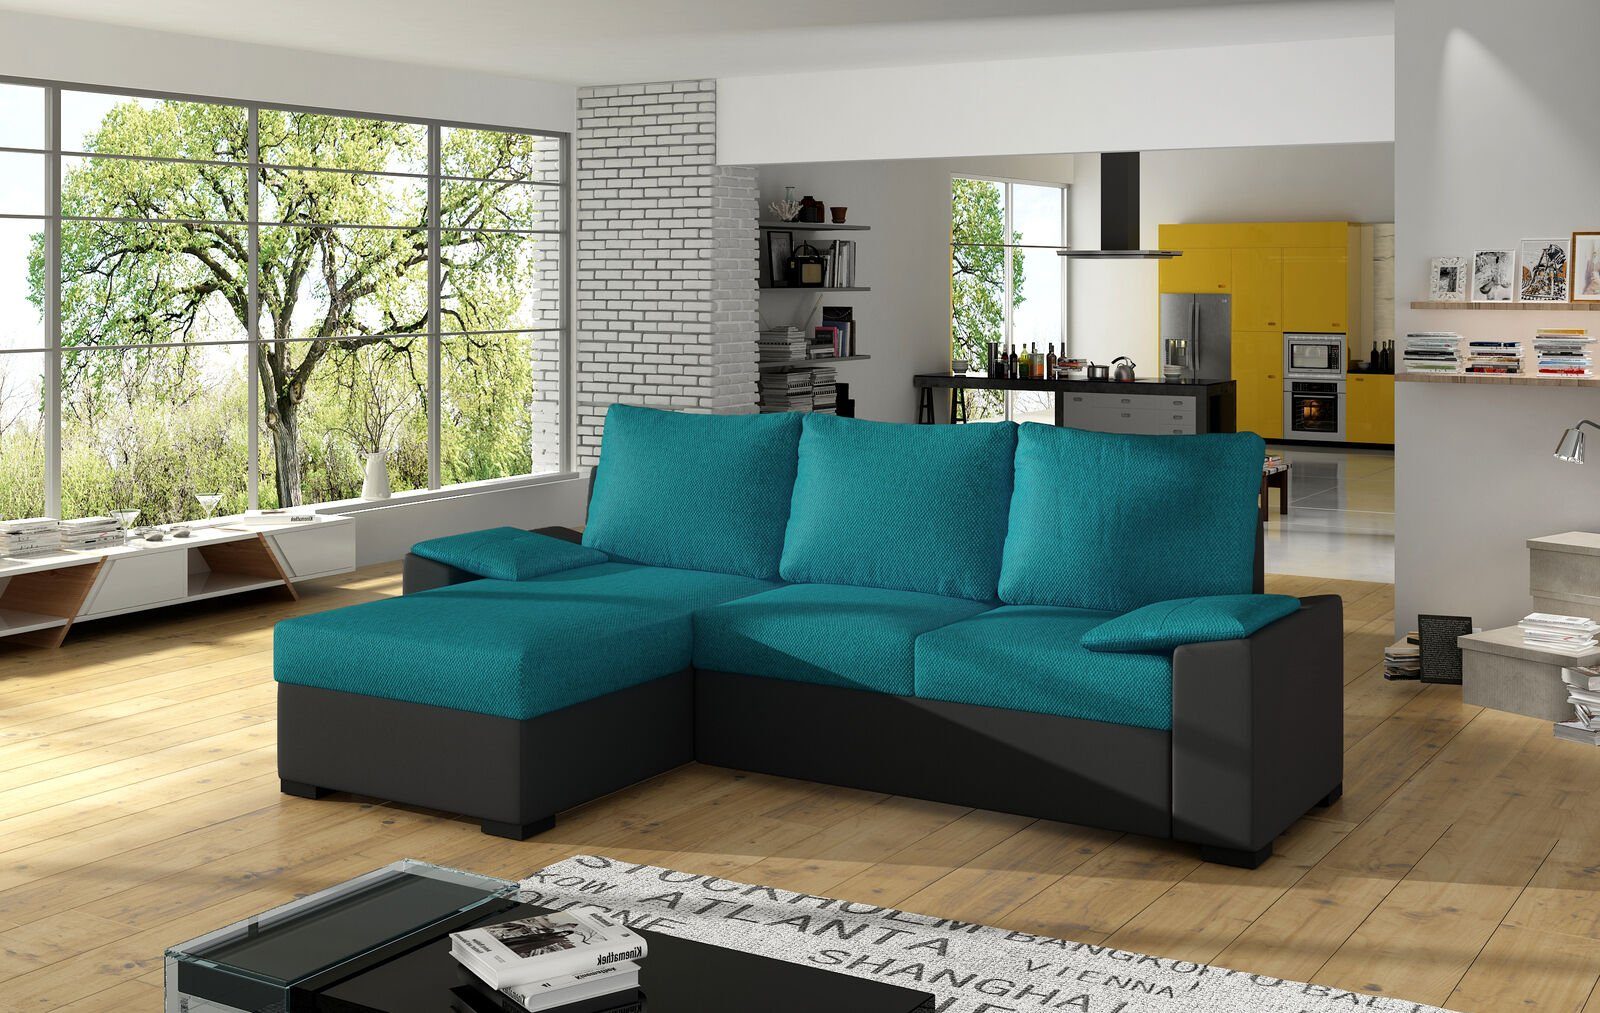 JVmoebel Ecksofa Design Ecksofa Schlafsofa Bettfunktion Couch Leder Polster Textil, Mit Bettfunktion Blau / Schwarz